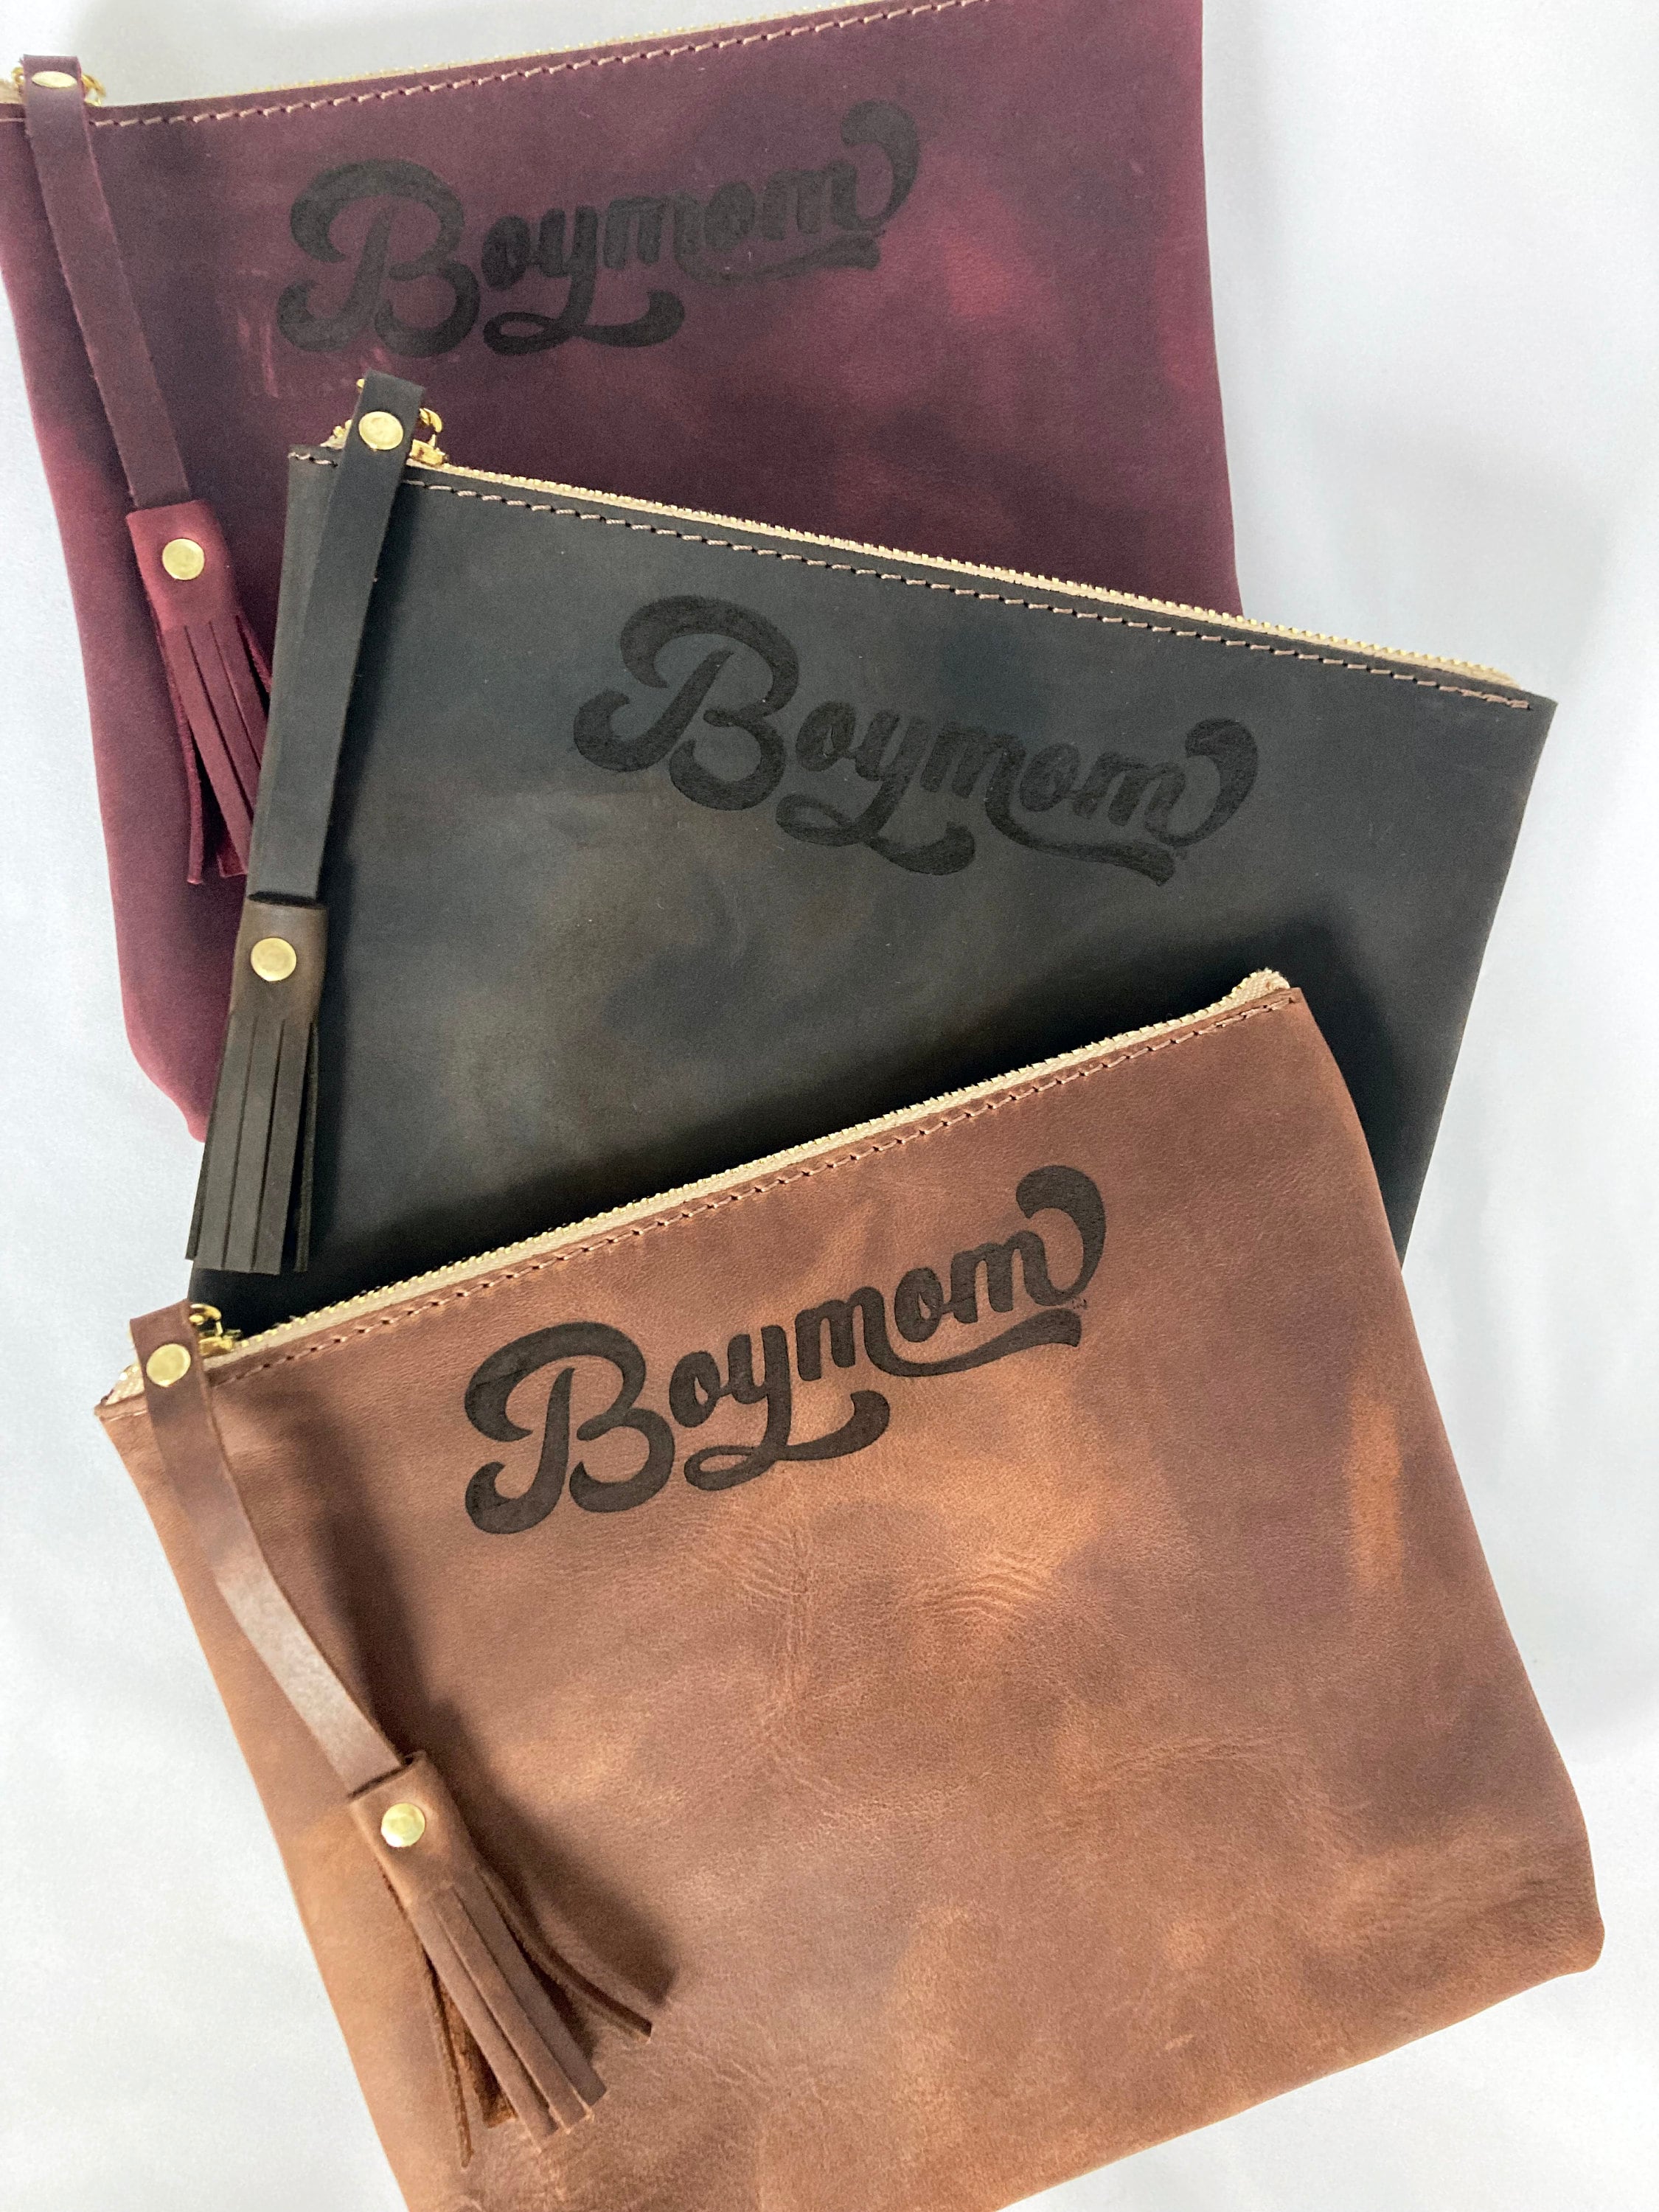 Boymom® Leather Pouch Retro Large